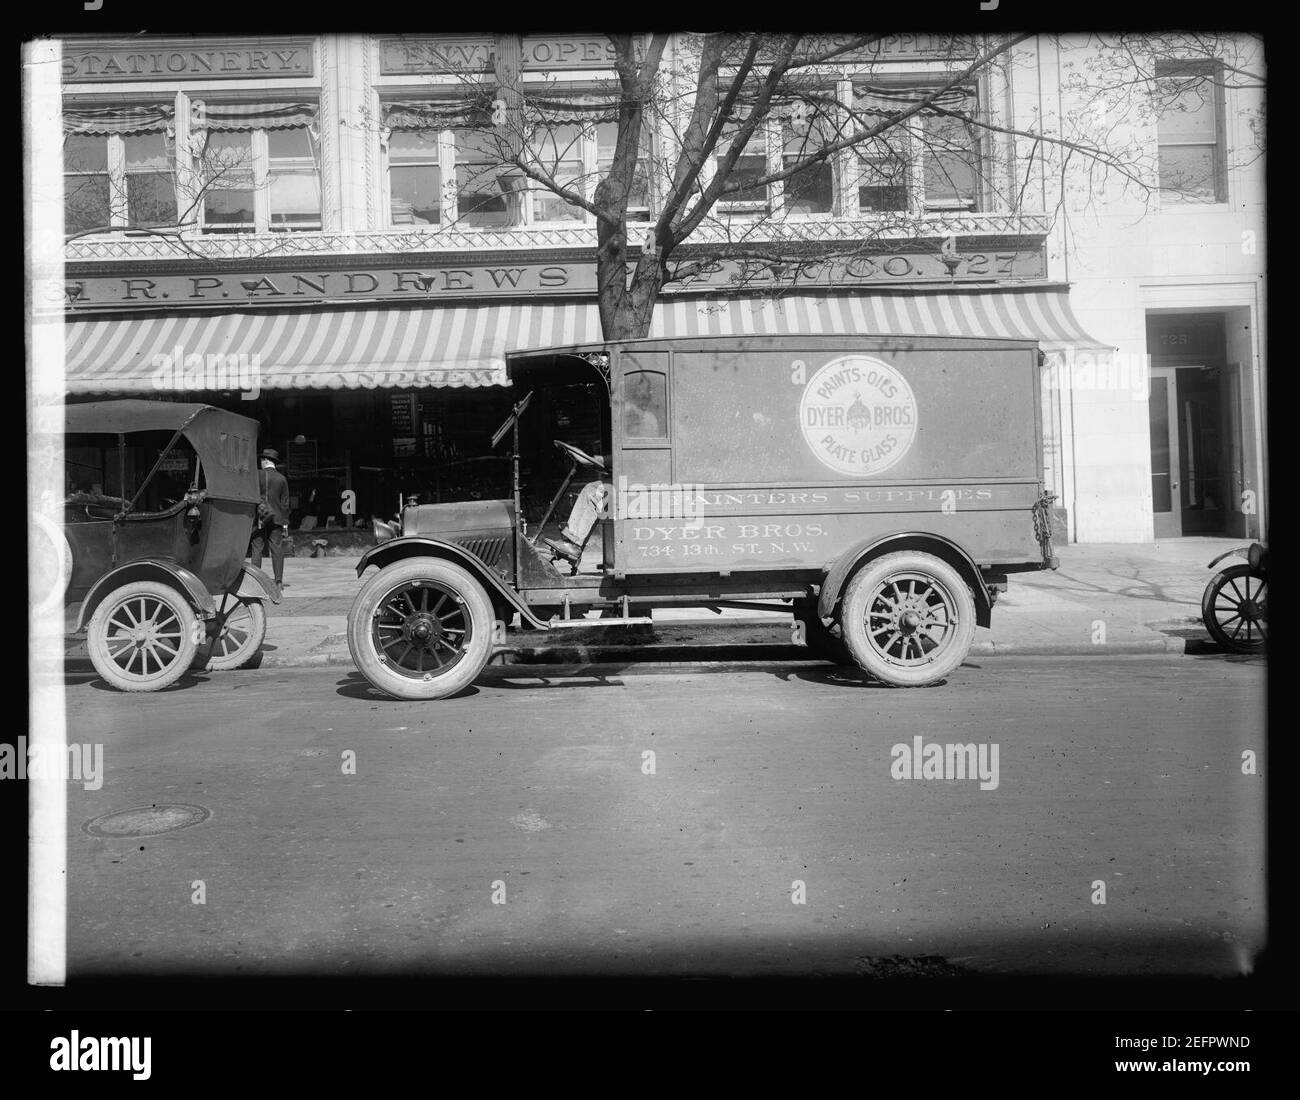 Oldsmobile truck, Dyer Bros., (Washington, D.C.) Stock Photo